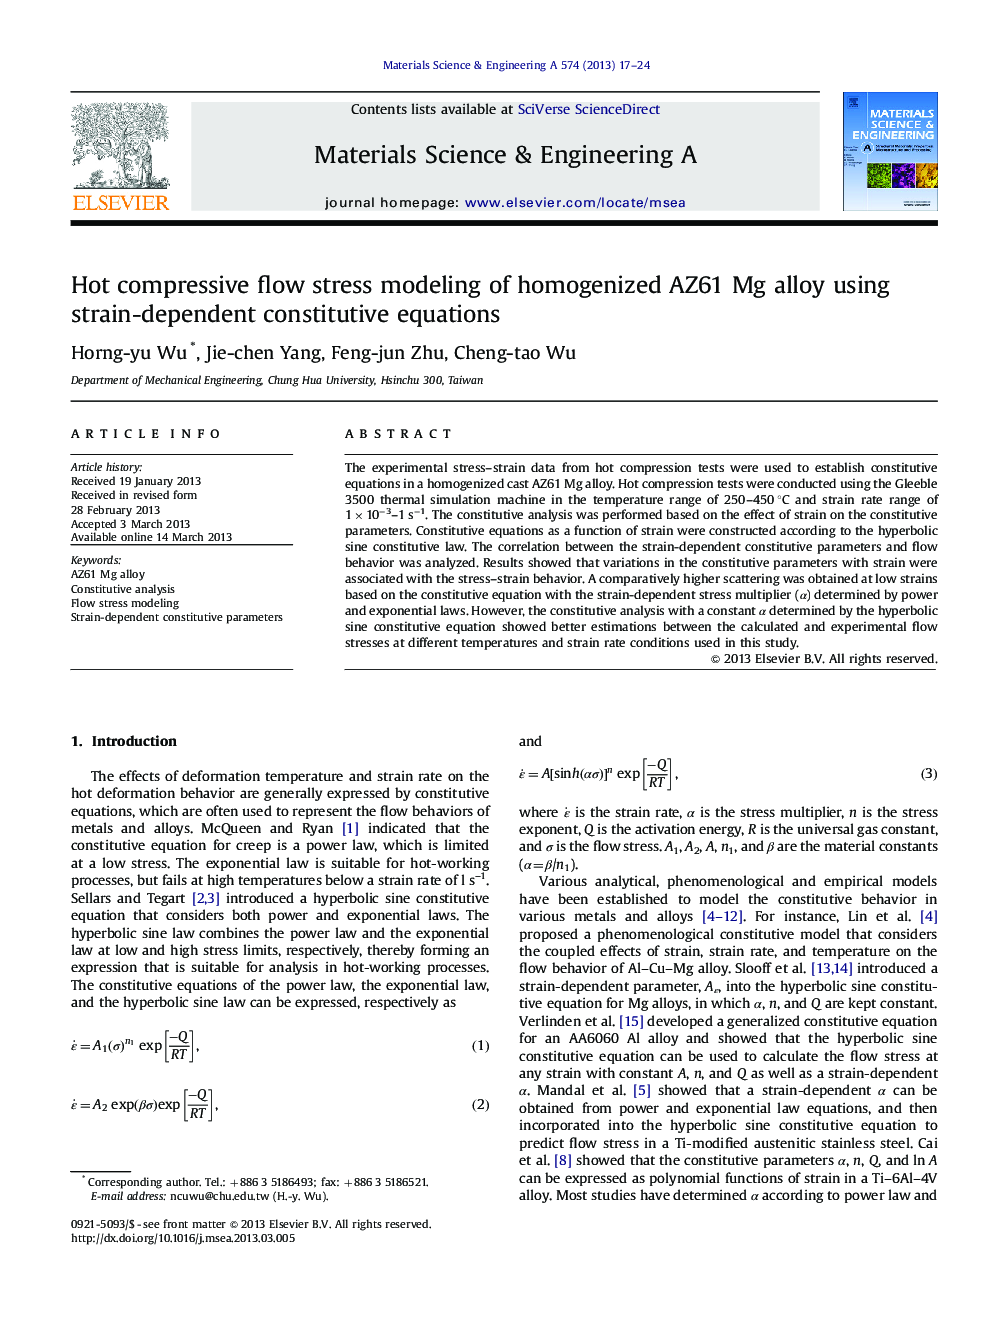 Hot compressive flow stress modeling of homogenized AZ61 Mg alloy using strain-dependent constitutive equations